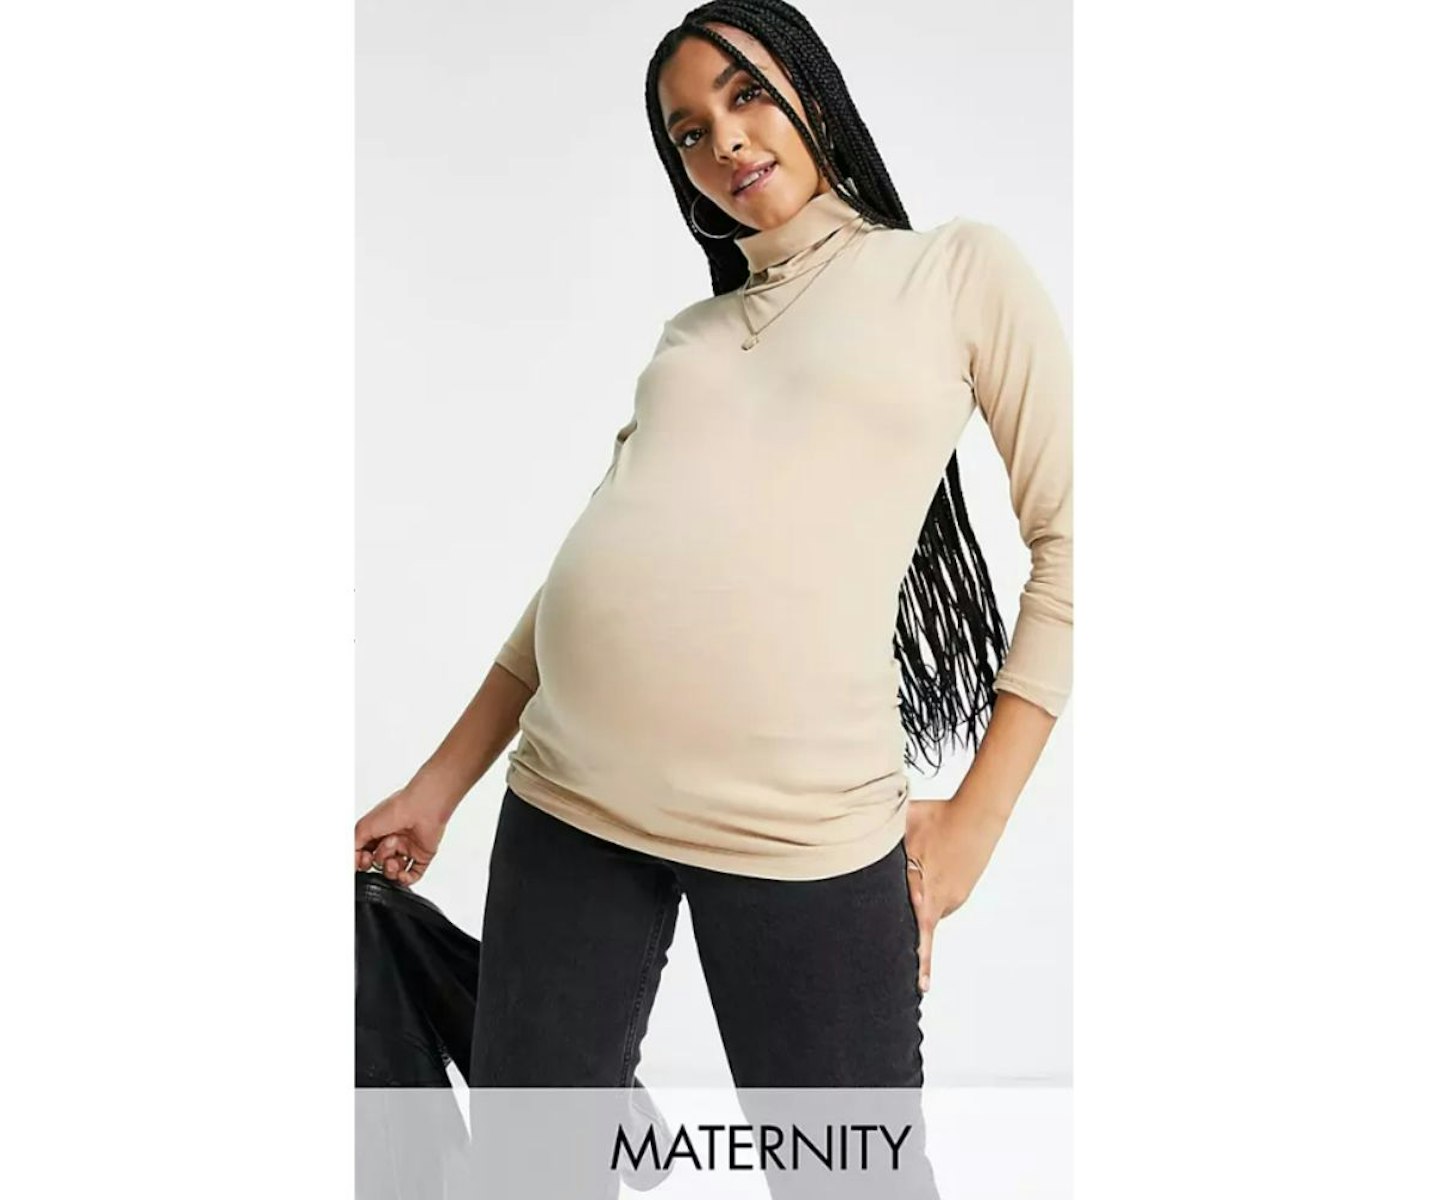 ASOS-maternity-sale